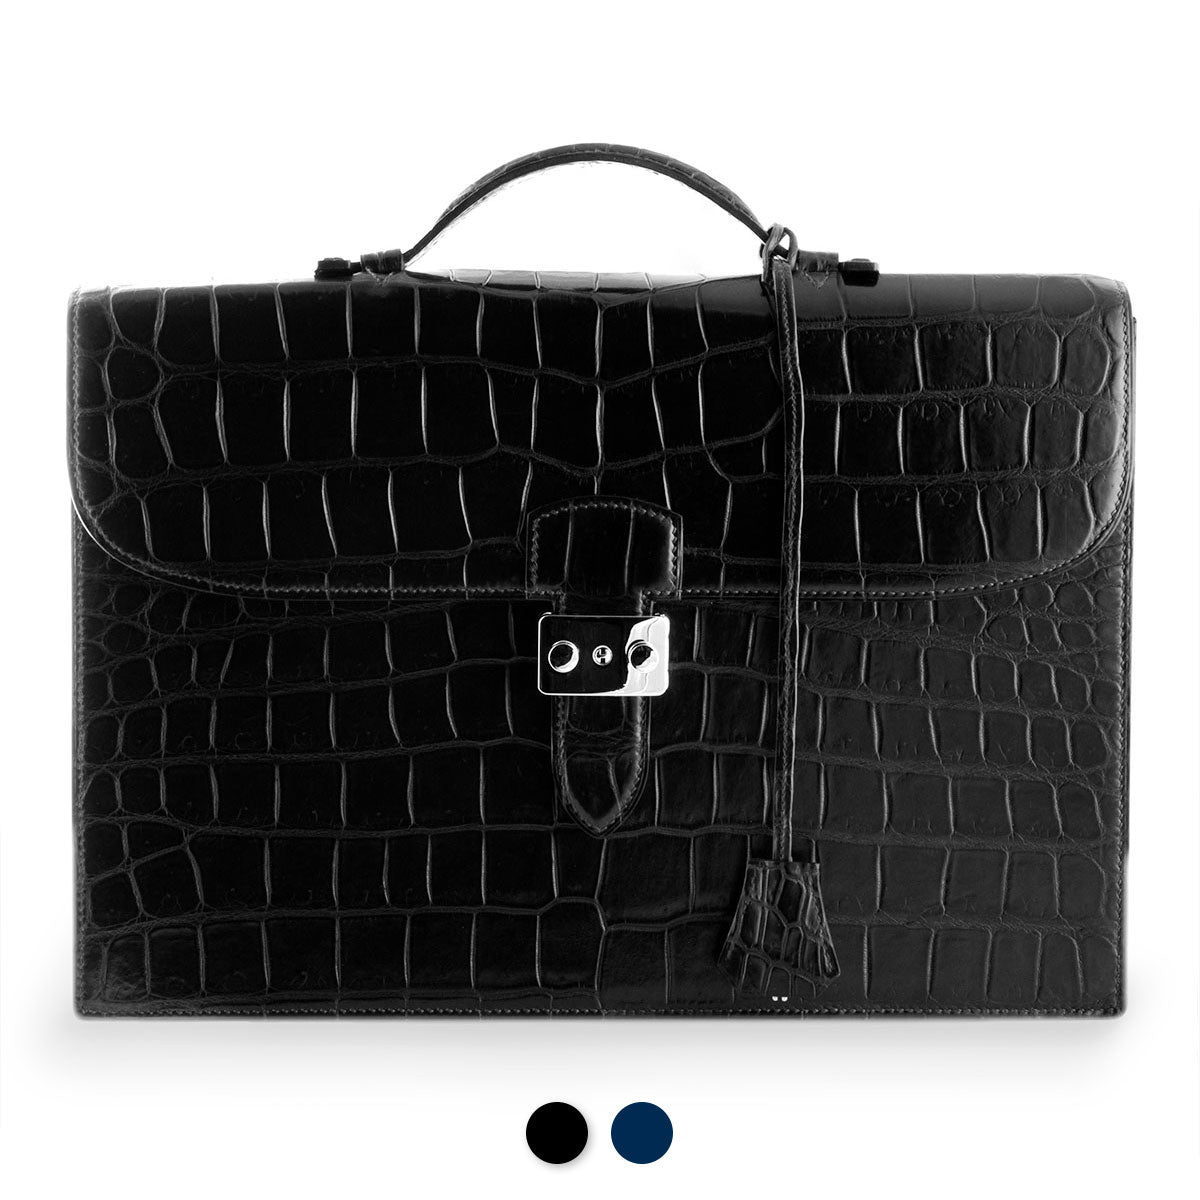 Leather suitcase - Black alligator / crocodile - Paris store – ABP Concept